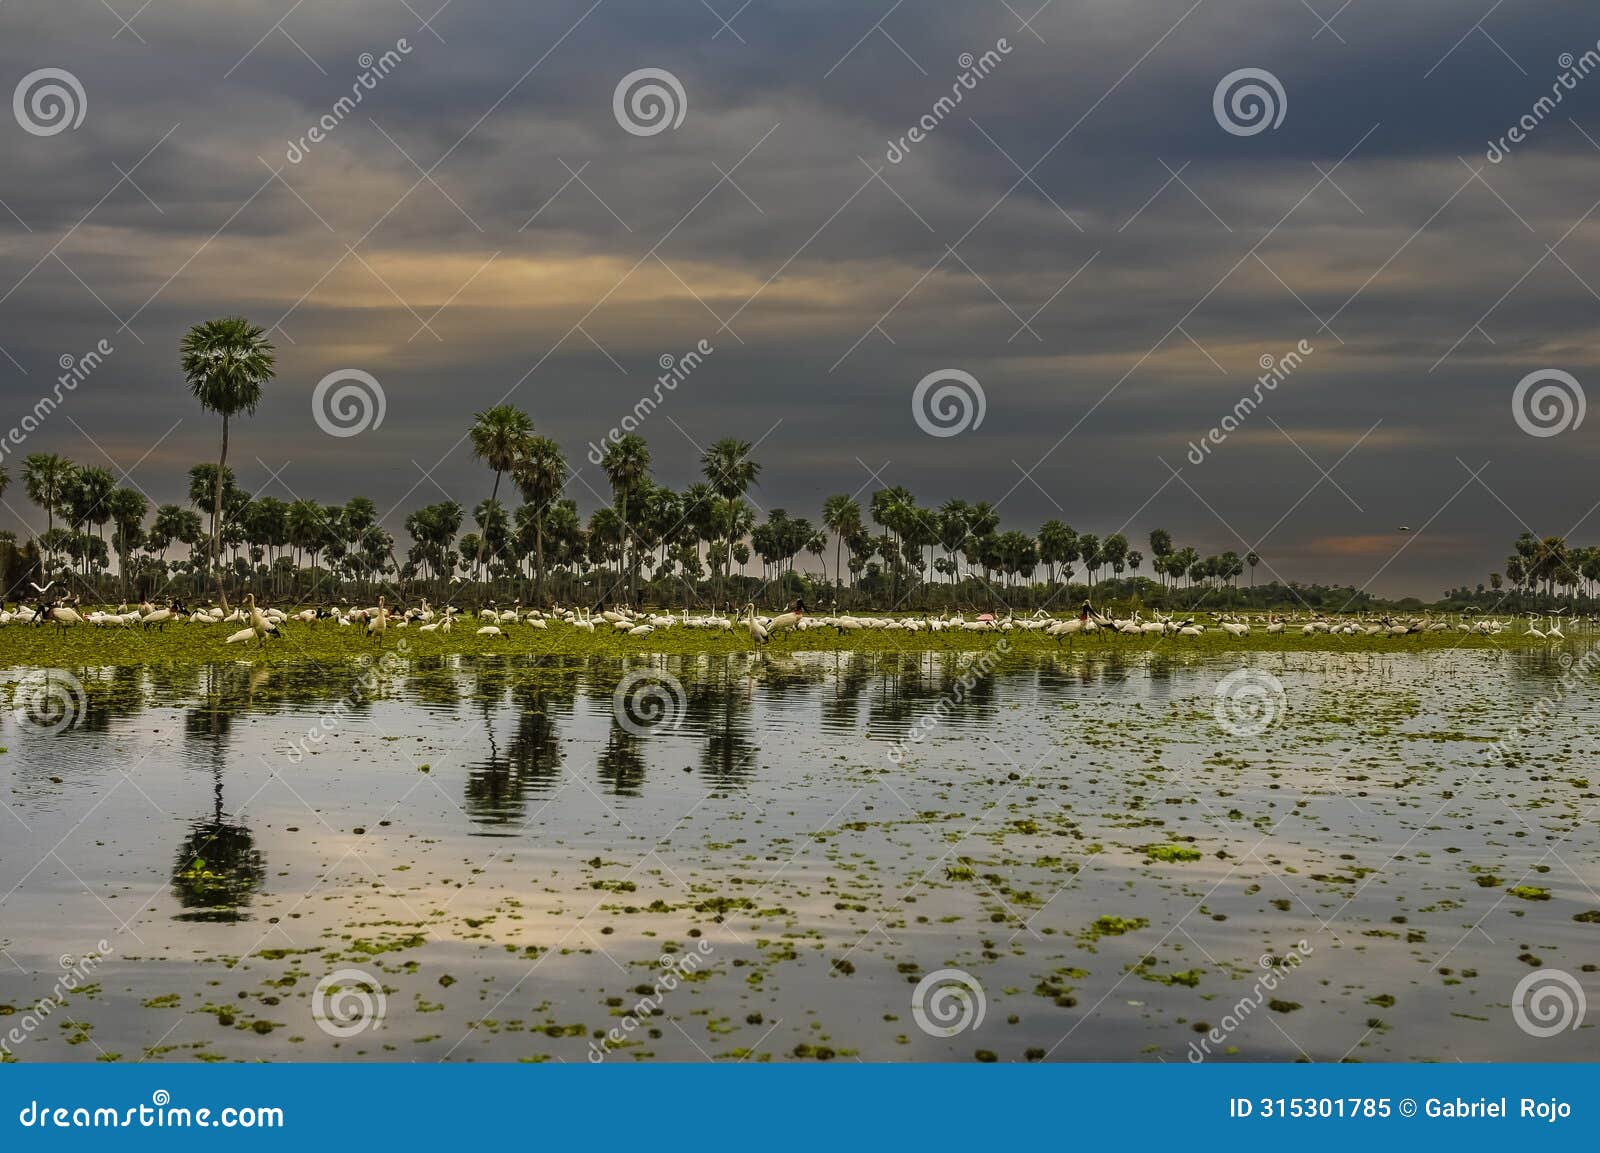 birds flock landscape in la estrella marsh, formosa province,